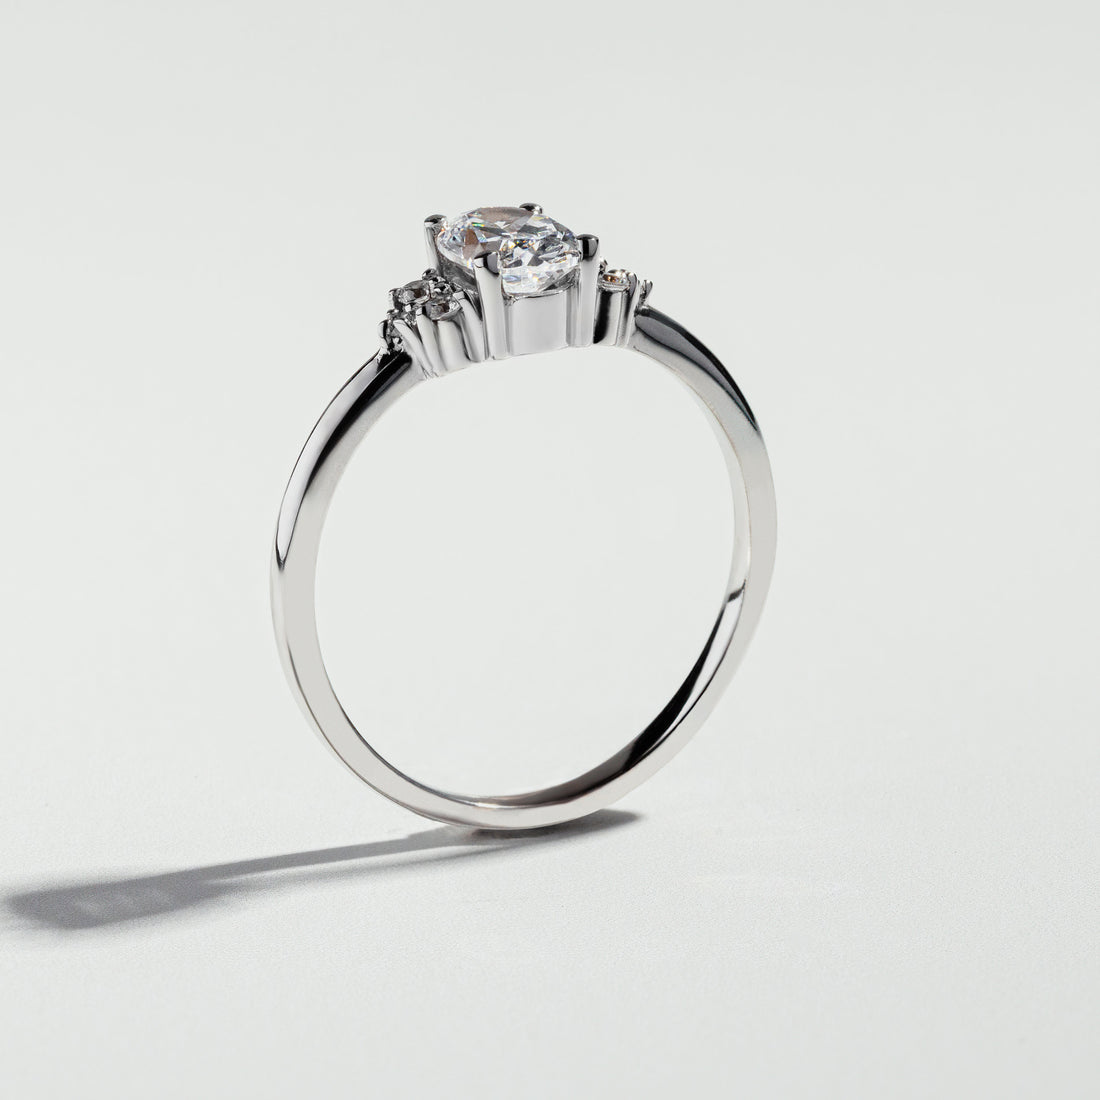 The Round Cut Vintage Diamond Ring